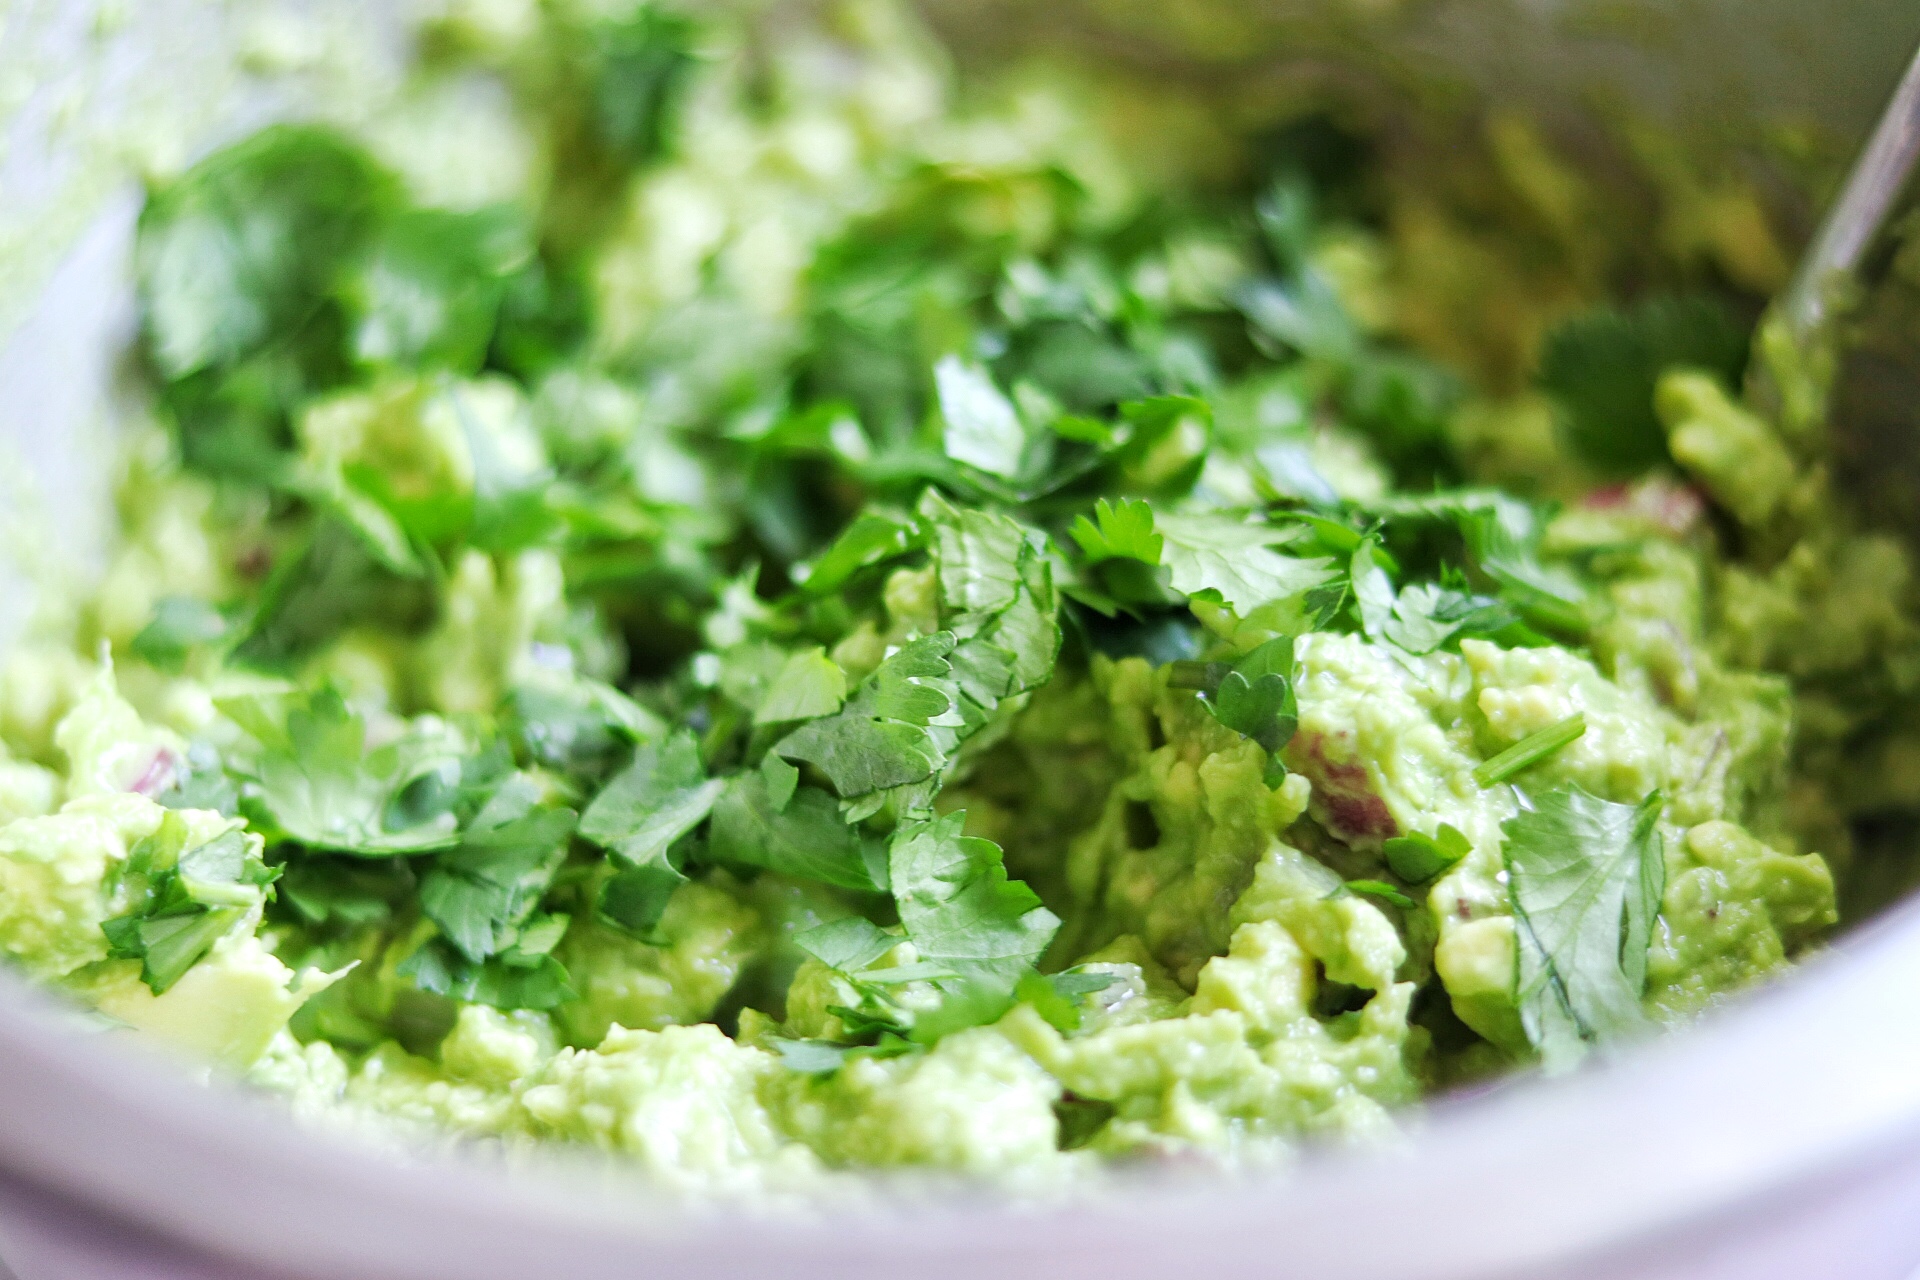 how to make guacamole